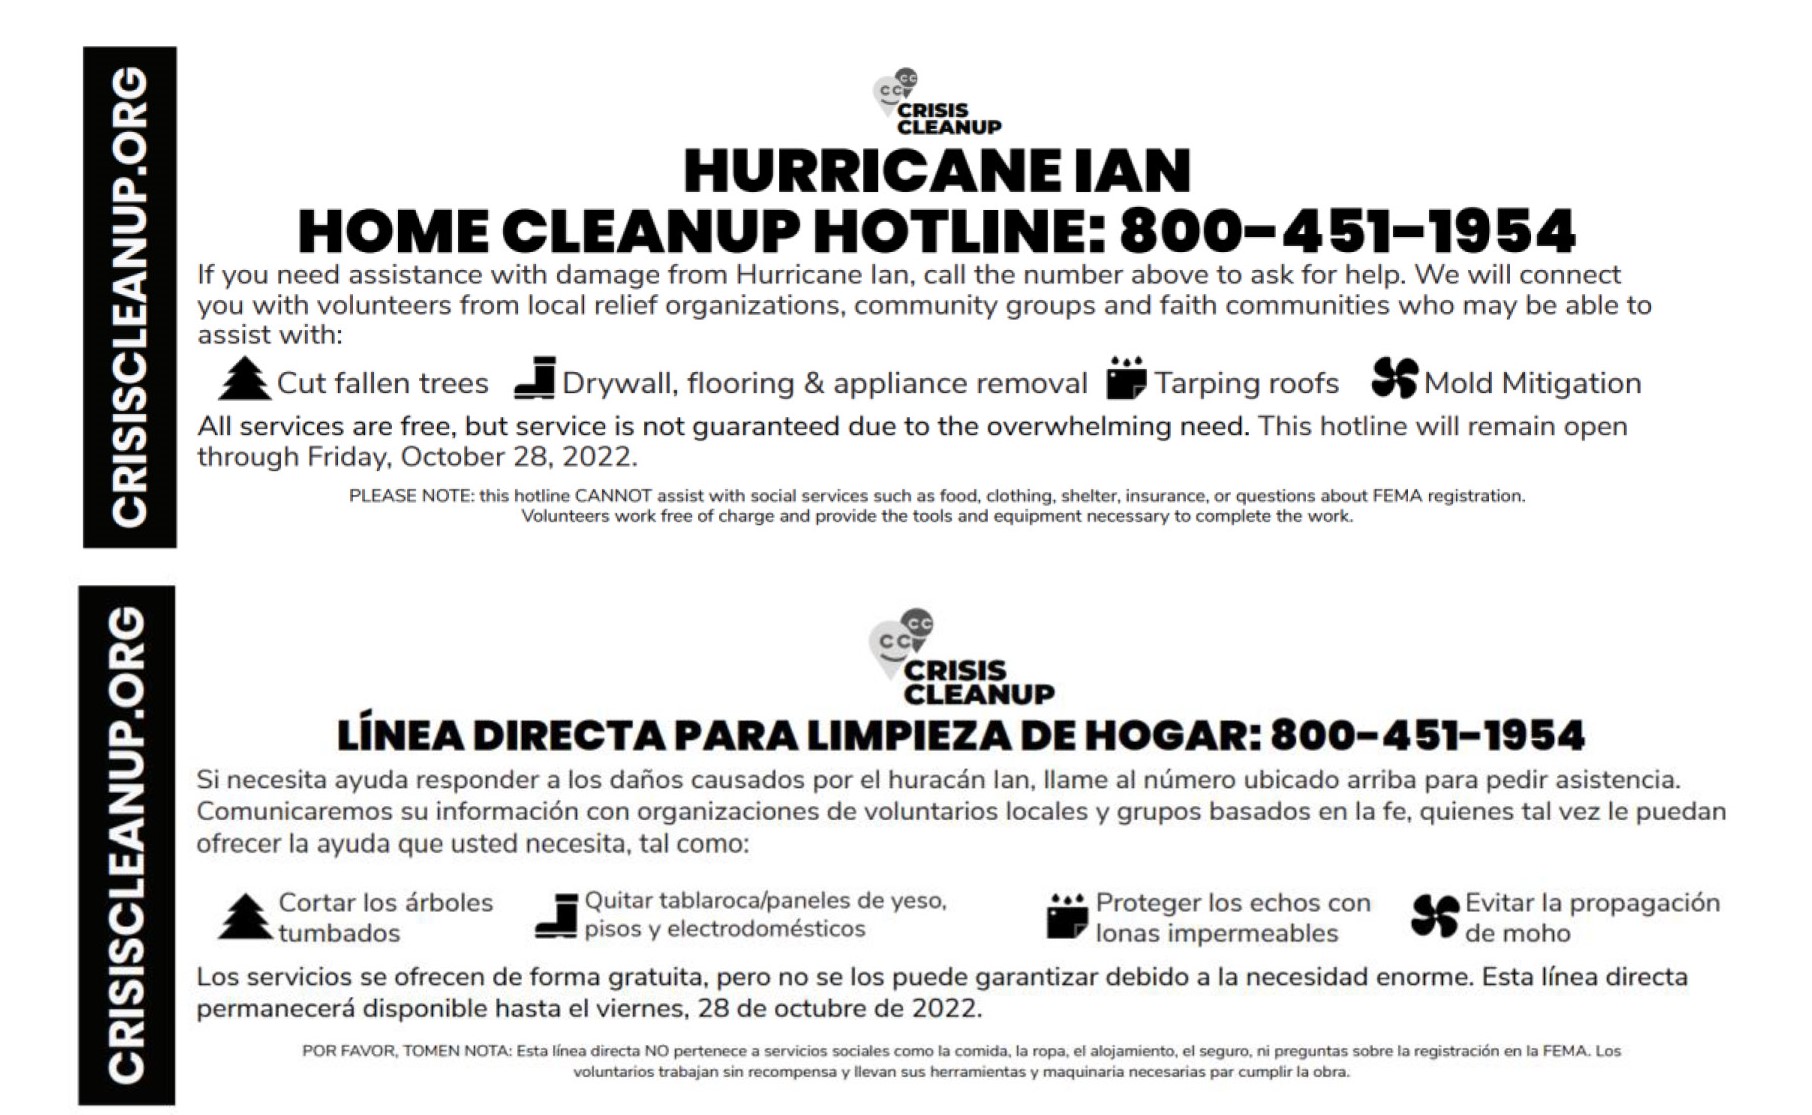 Hurricane IAN Home Cleanup Hotline: 800-451-1954